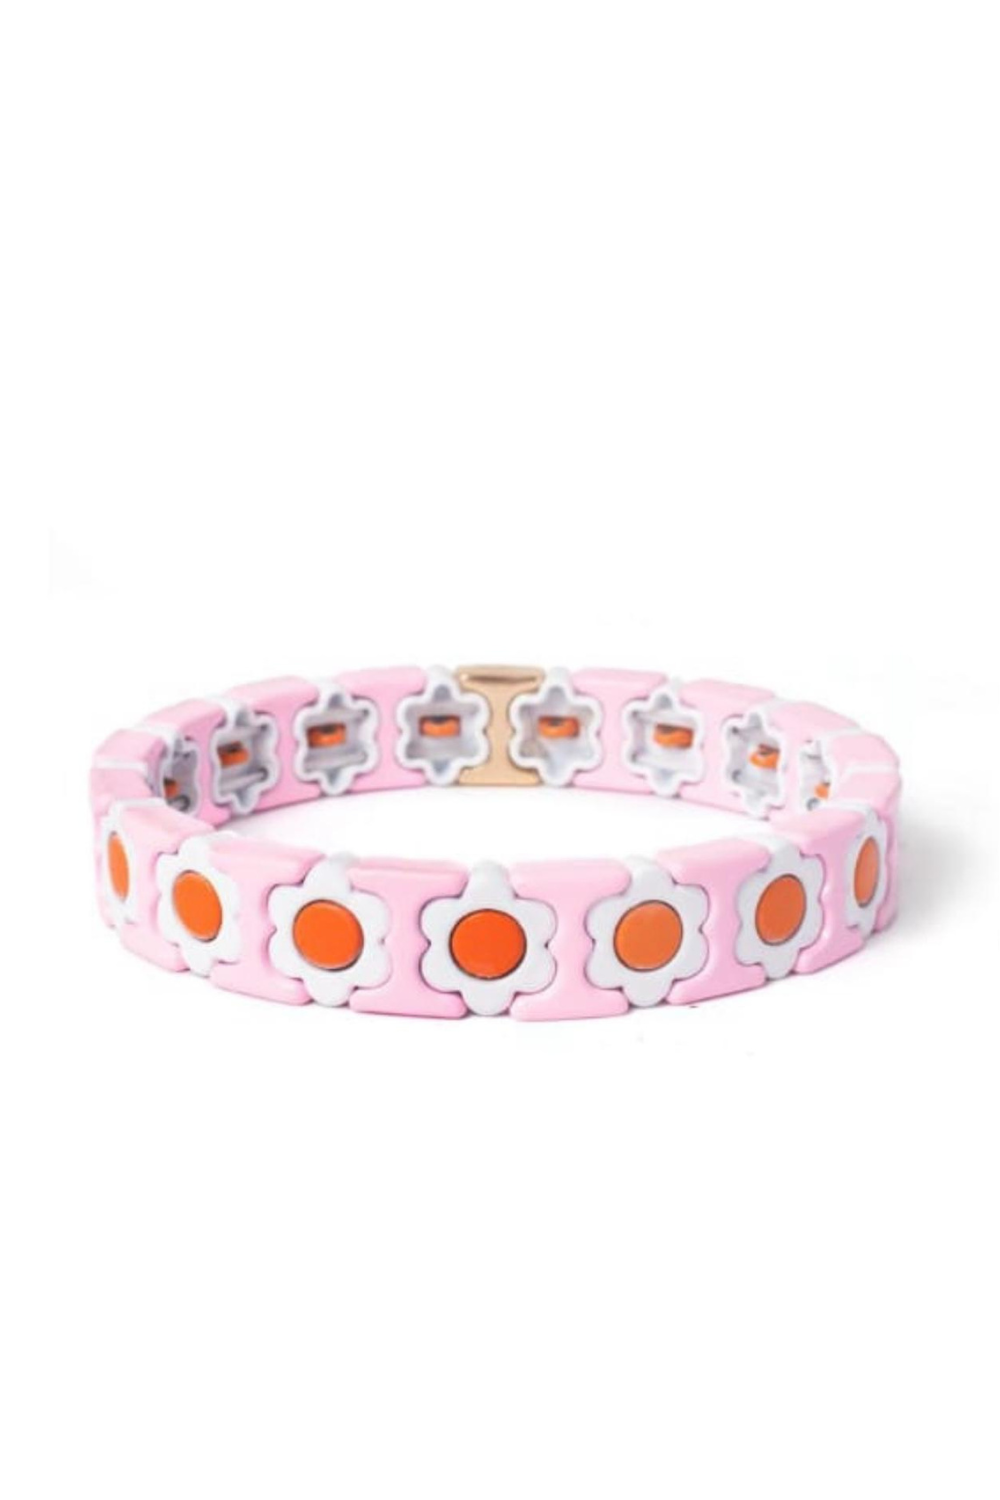 Daisy chain bracelet - Pink/white/orange